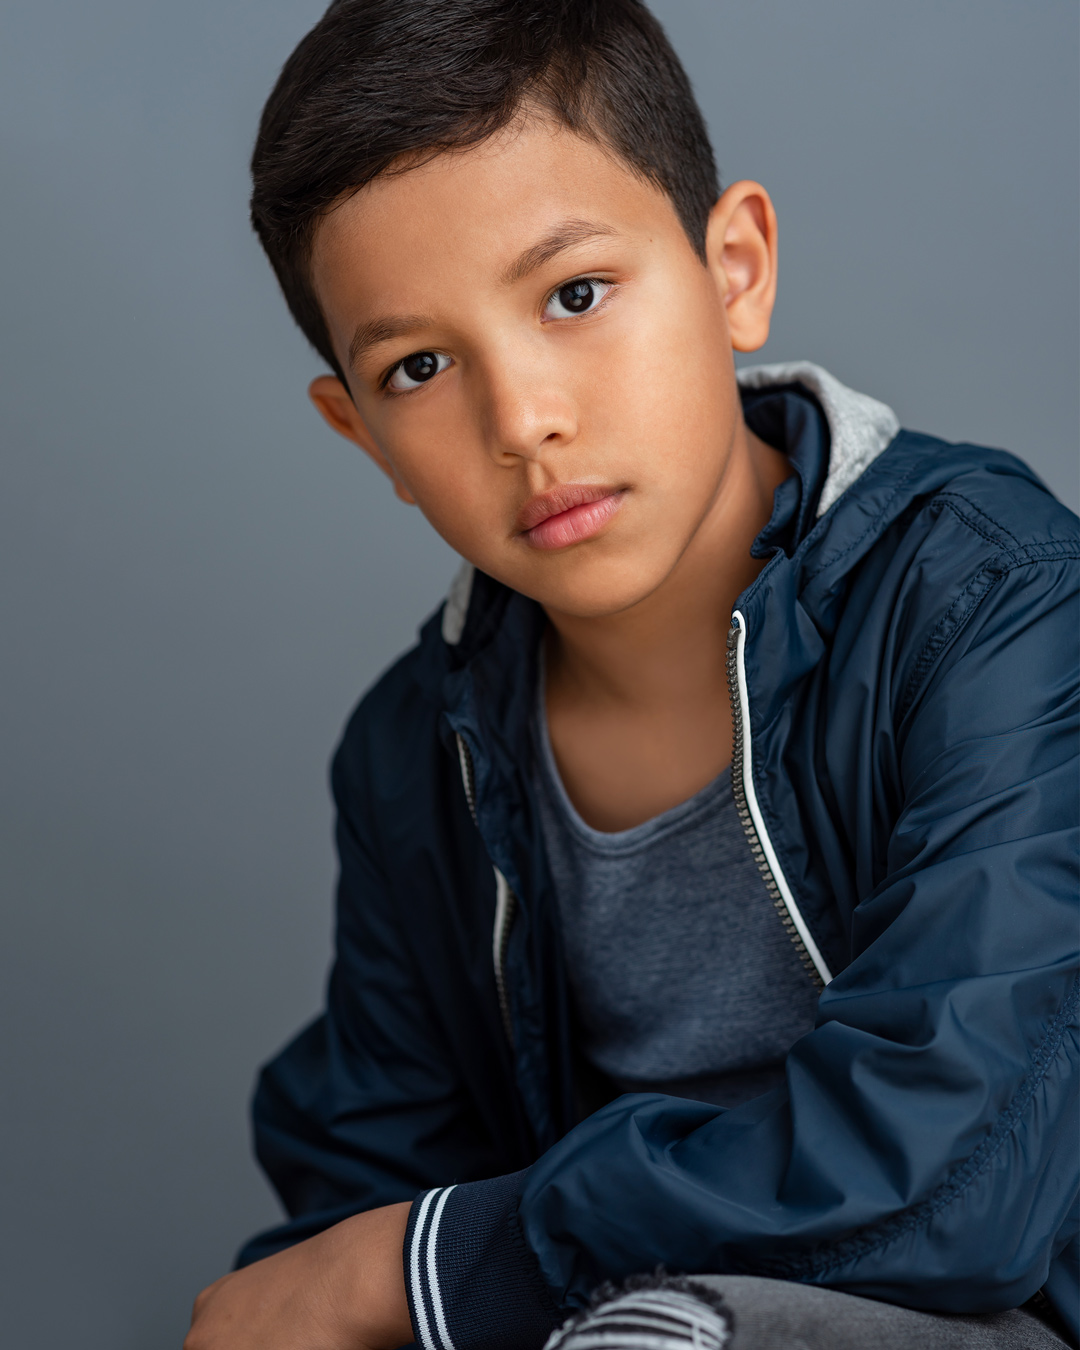 CW network hispanic child actor Byron Iseah Diaz in Vancouver